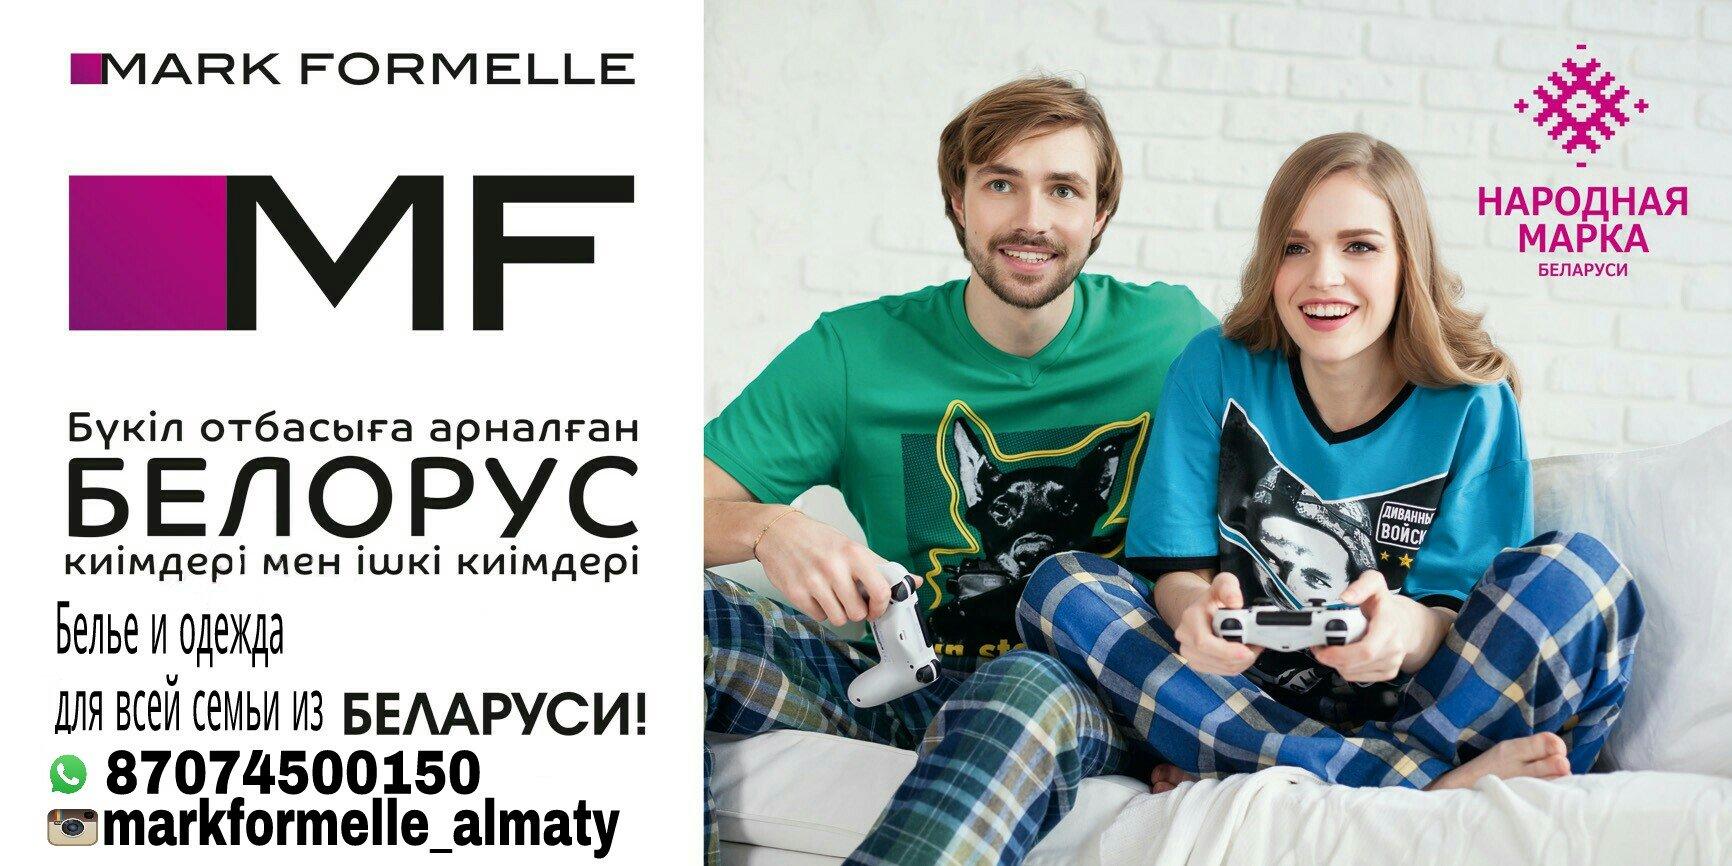 Mark Formelle Интернет Магазин В Казахстане